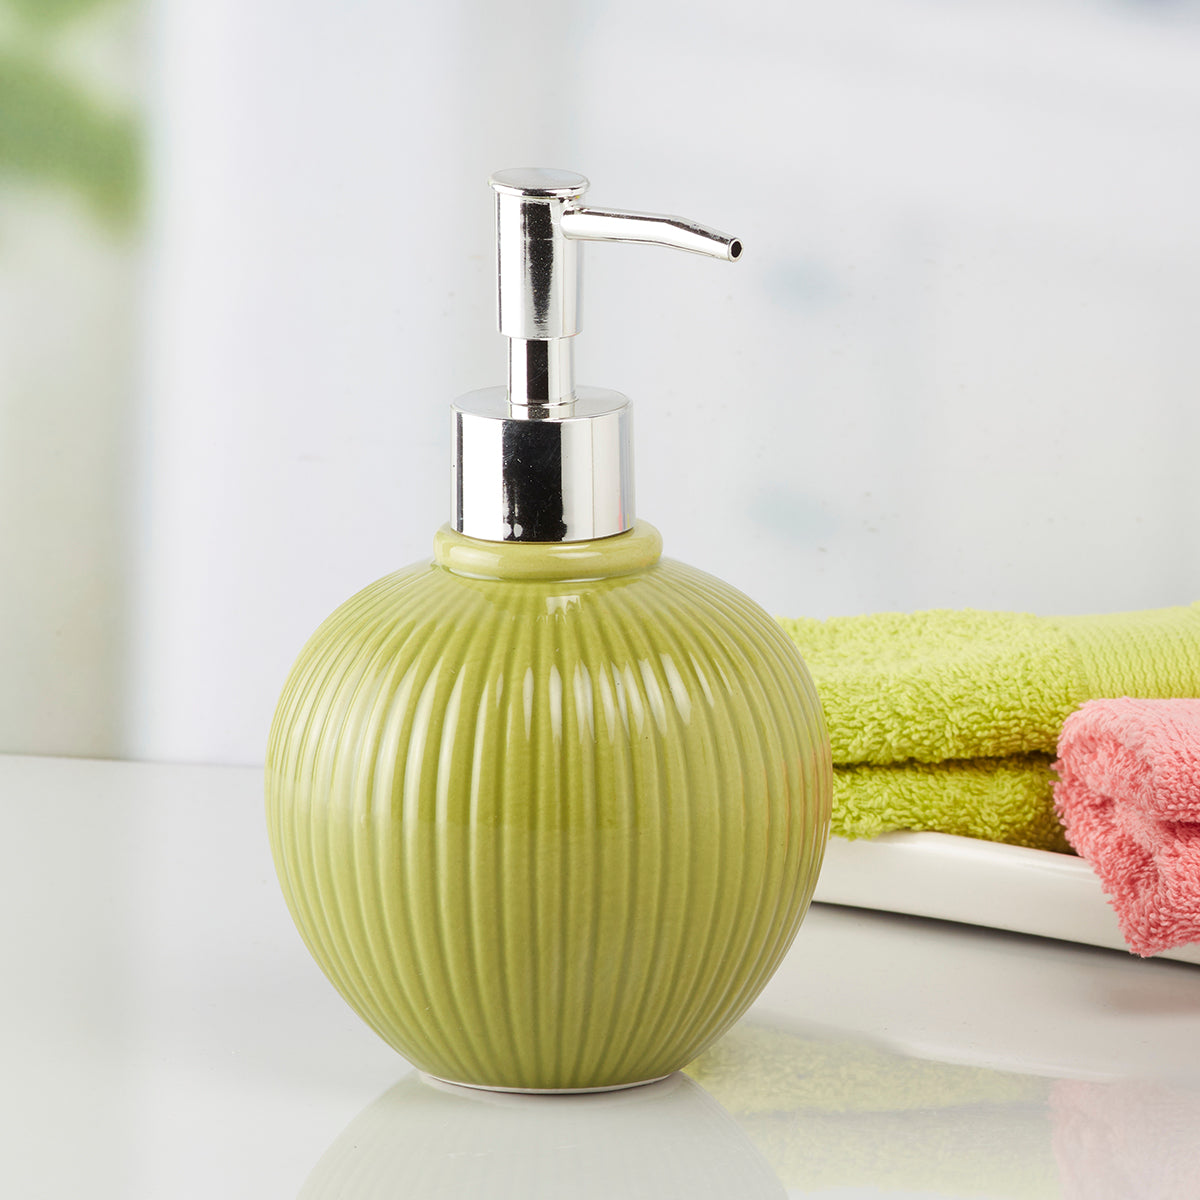 Ceramic Soap Dispenser Pump for Bathroom for Bath Gel, Lotion, Shampoo (8049)